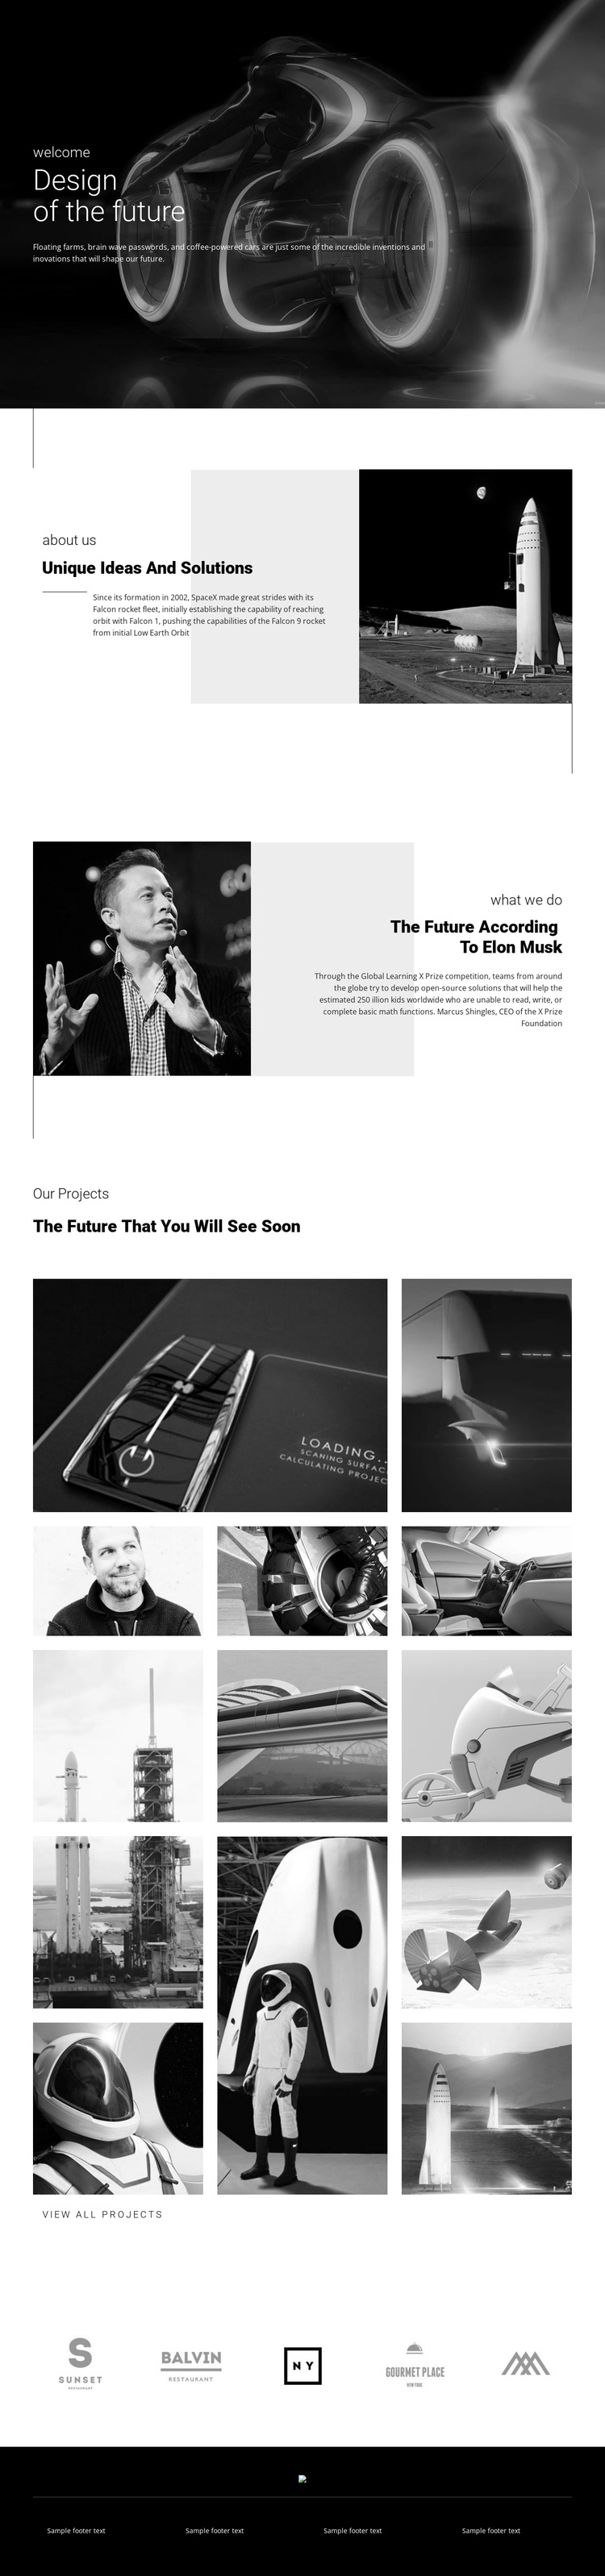 Design of future technology Joomla Template